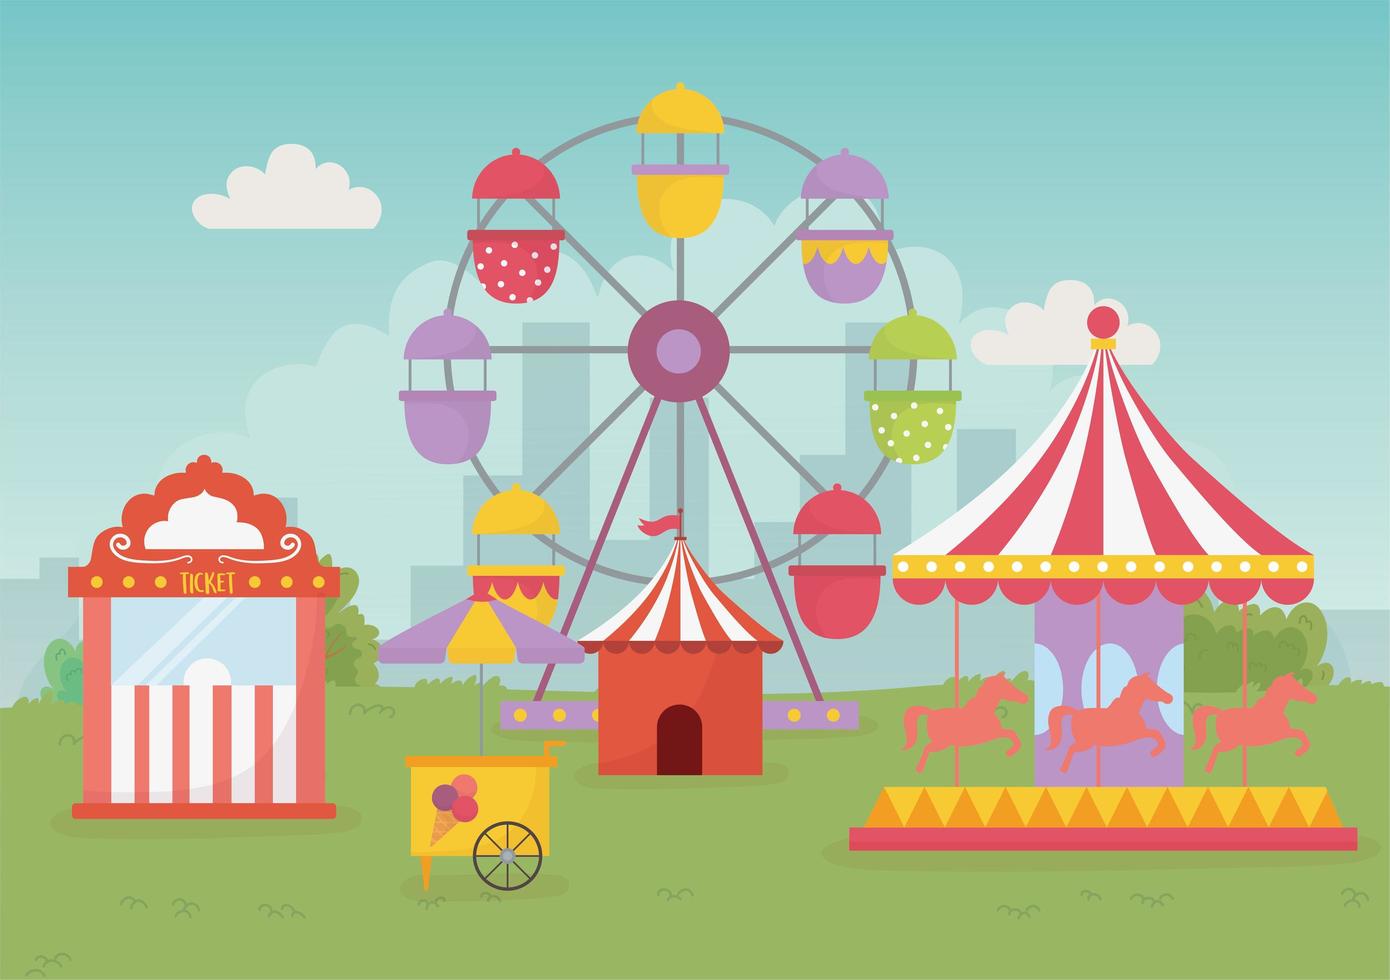 kermis carnaval tent carrousel ballonnen reuzenrad recreatie entertainment vector